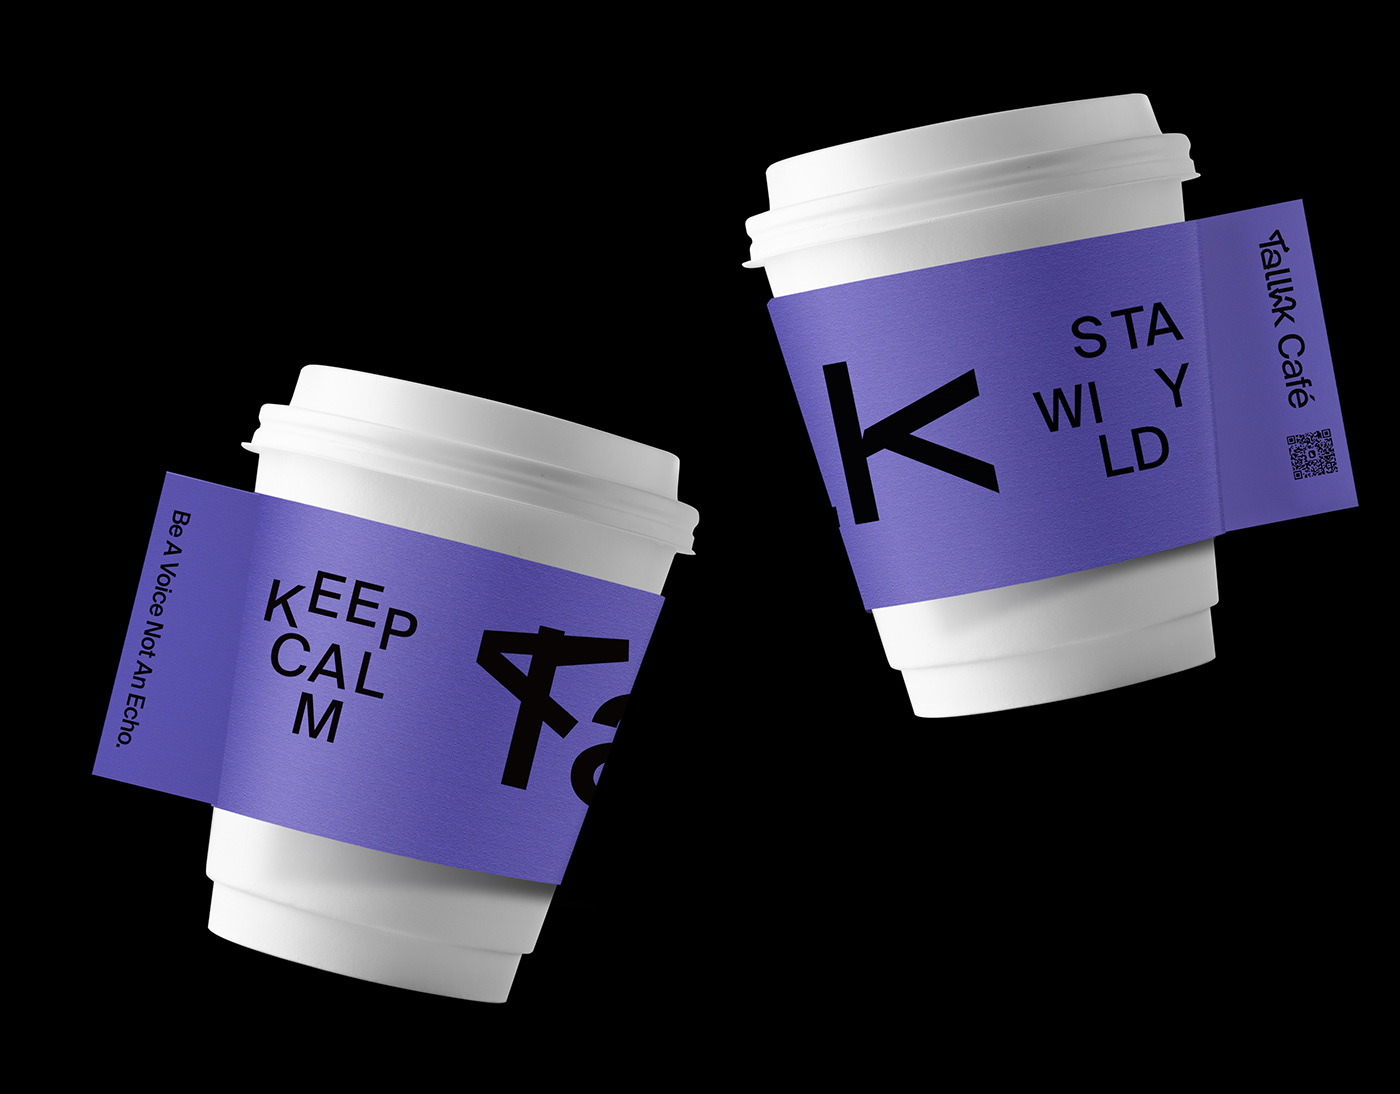 Talllk Café咖啡品牌設計